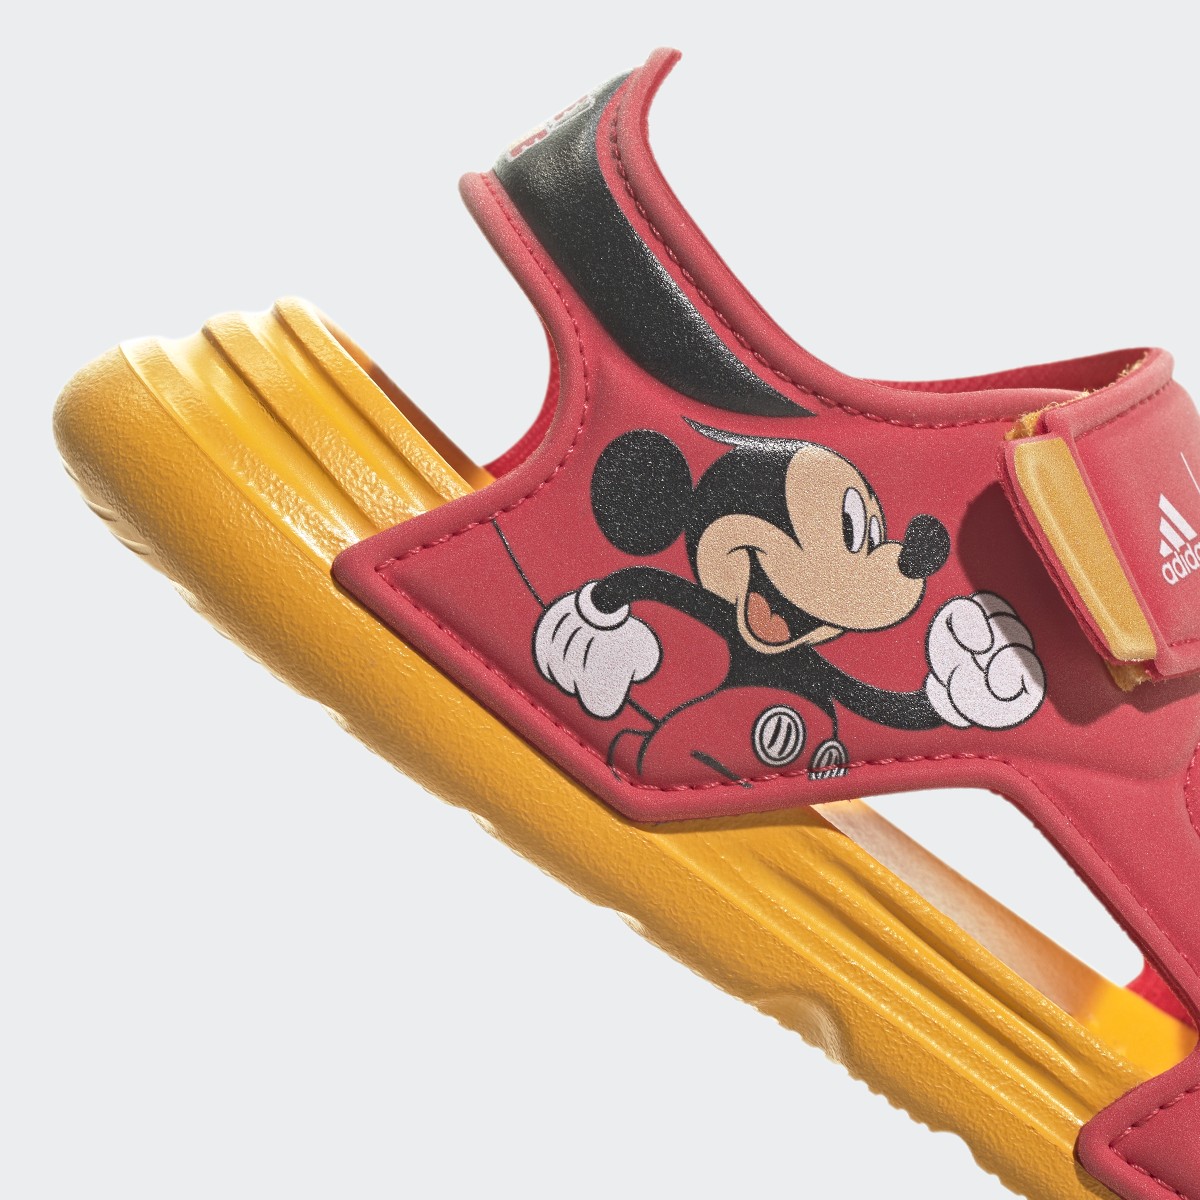 Adidas x Disney Mickey Maus AltaSwim Sandale. 9